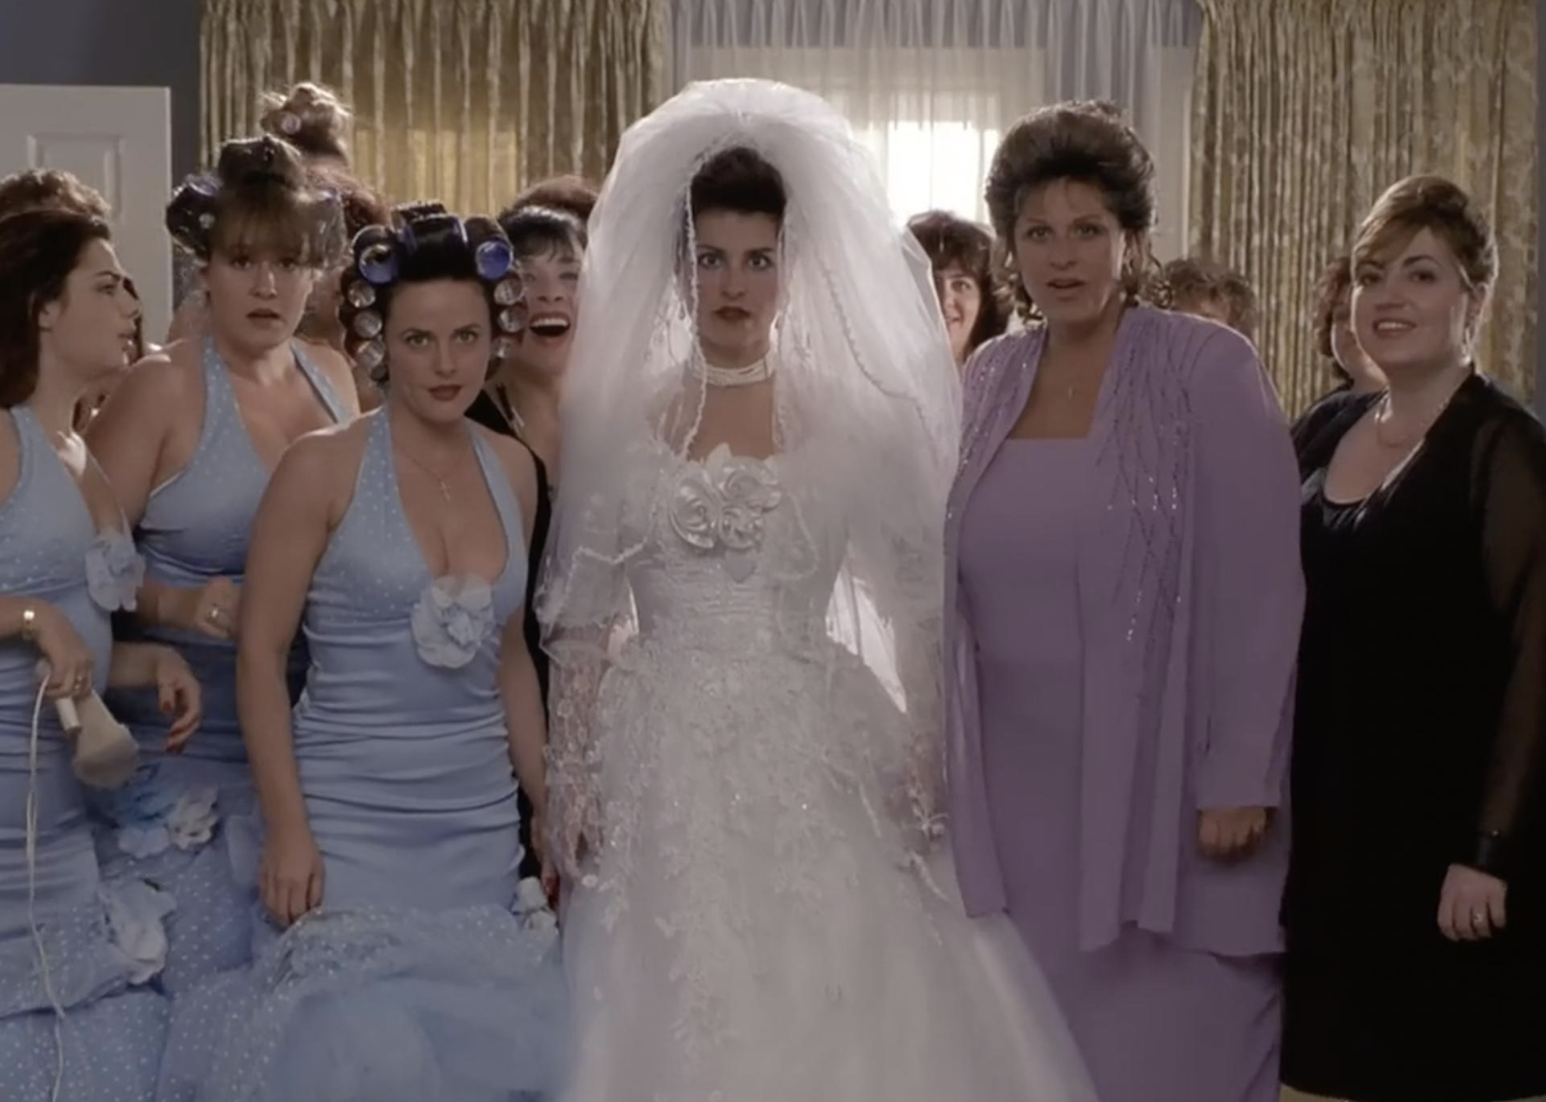 Gia Carides, Lainie Kazan, Andrea Martin, and Nia Vardalos in "My Big Fat Greek Wedding"